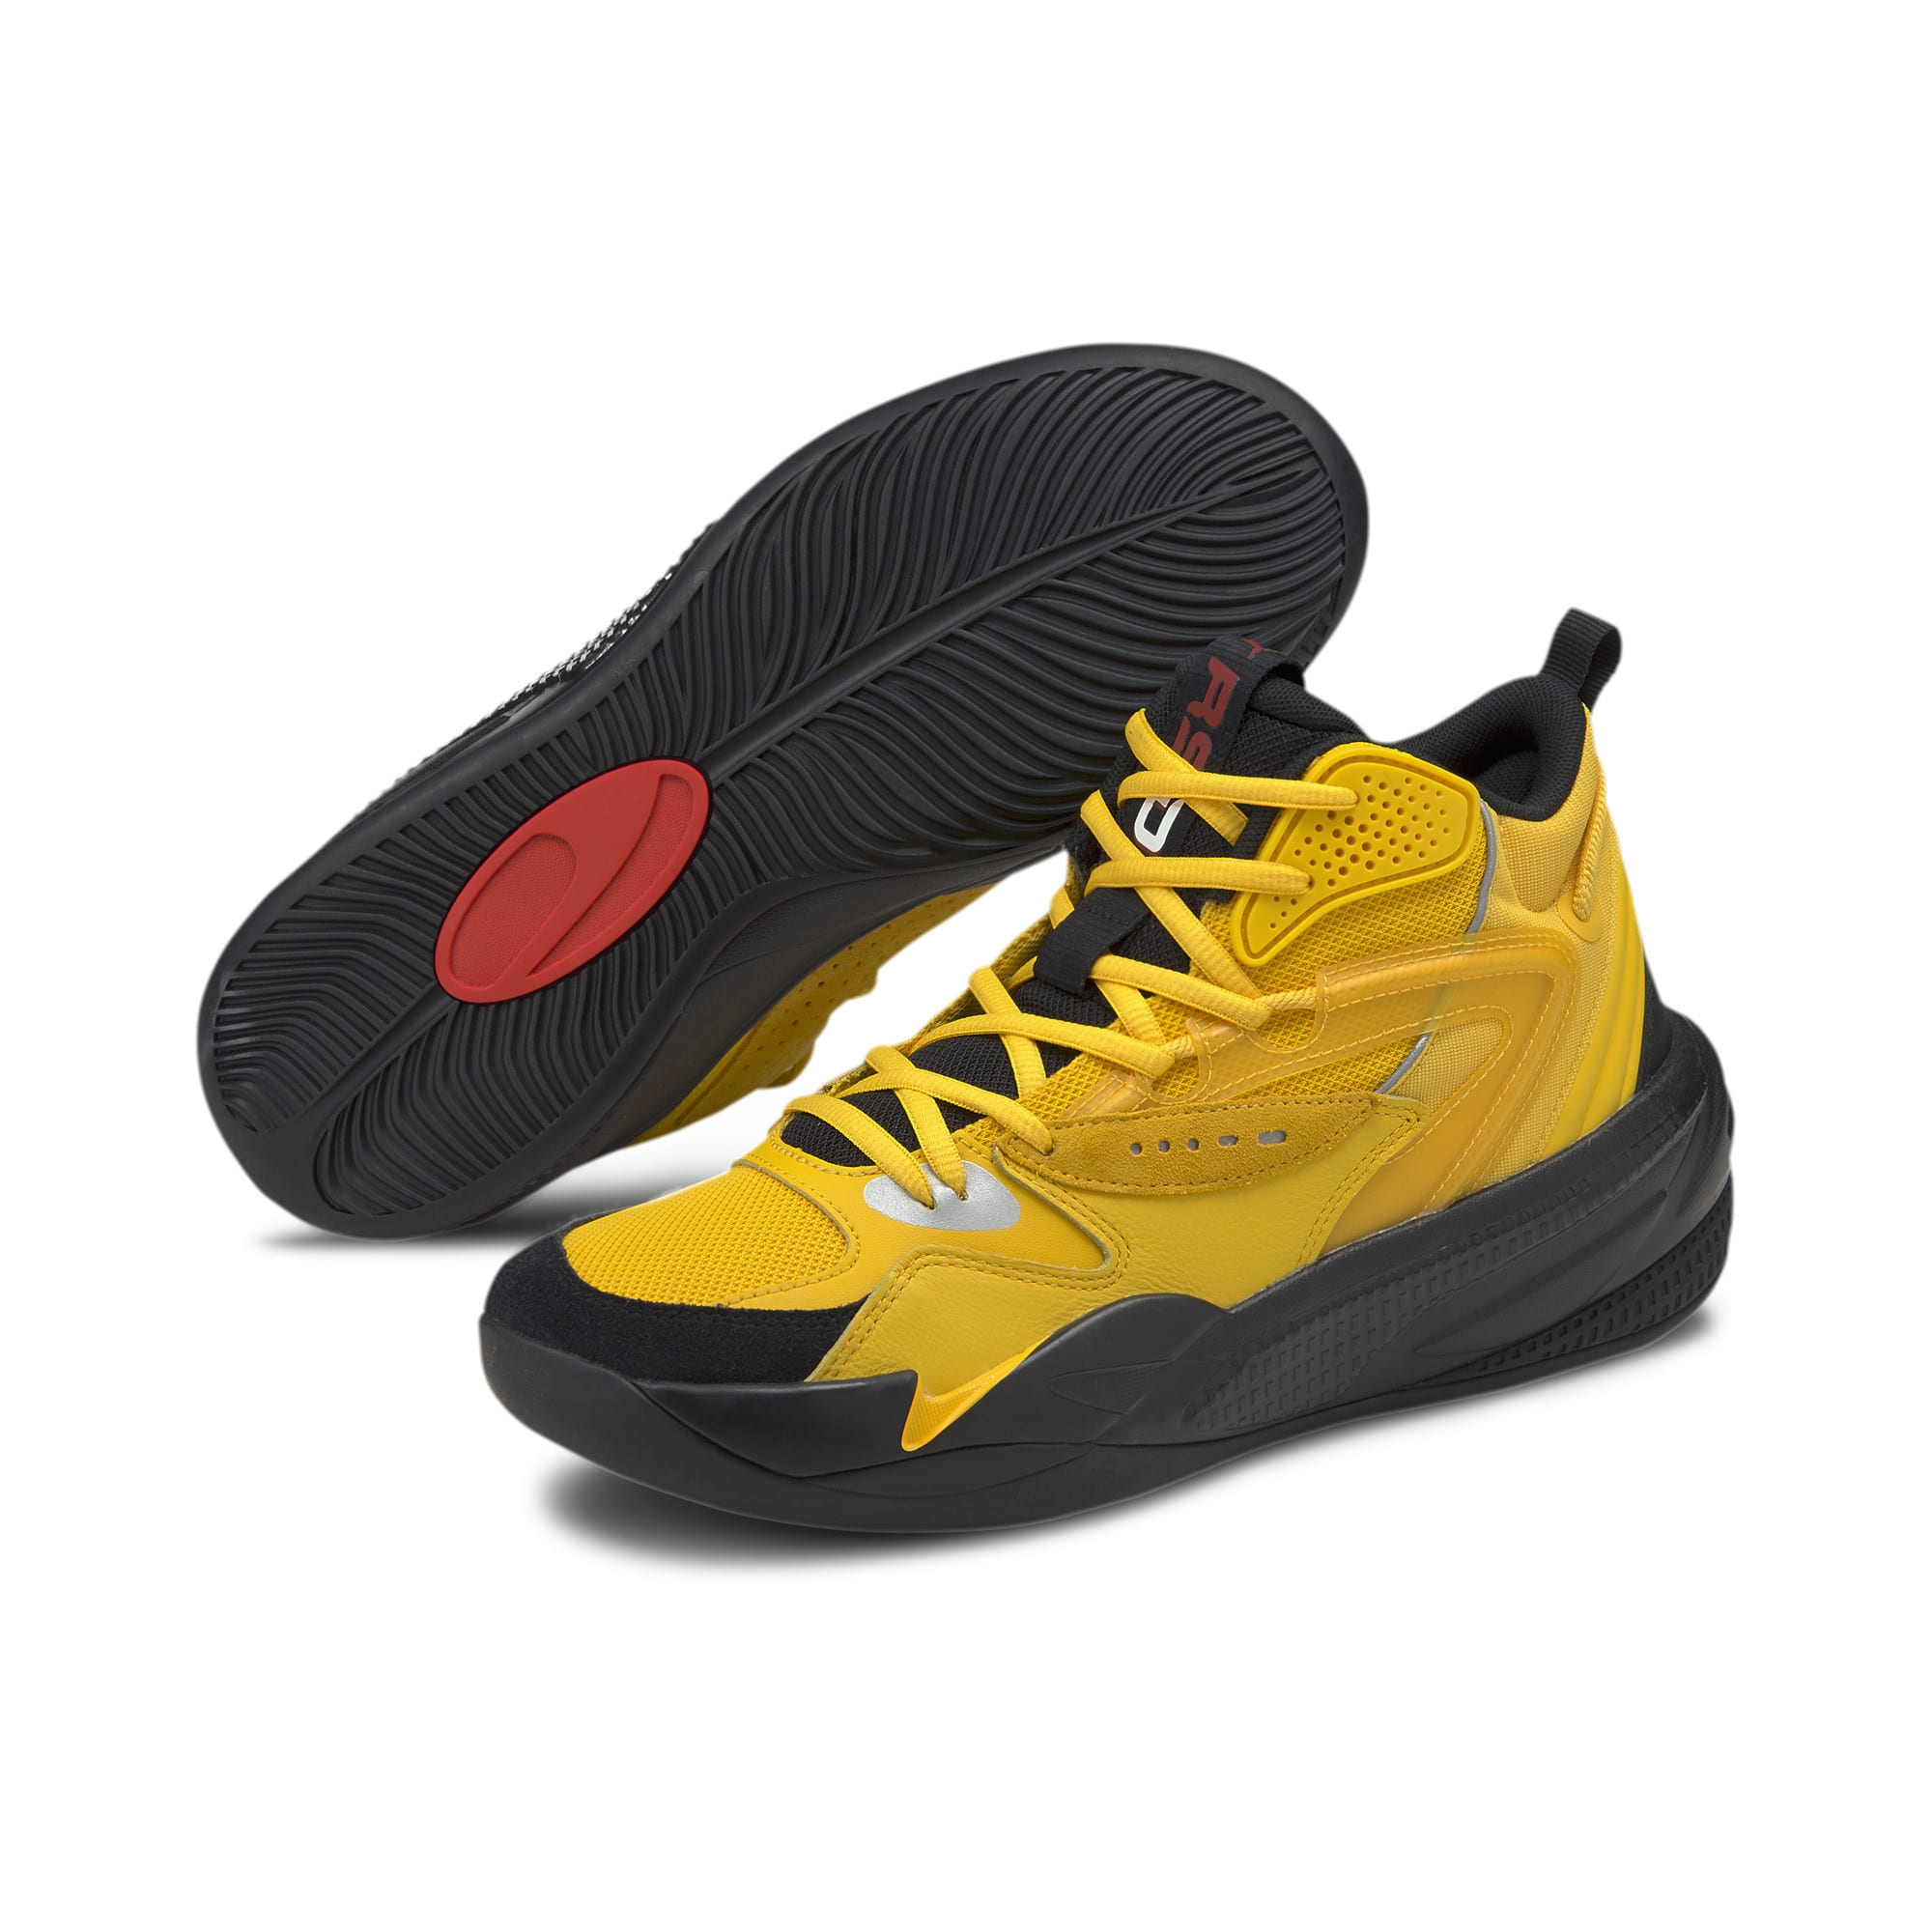 PUMA Releases J. Cole’s Second Signature Basketball Shoe, The DREAMER 2